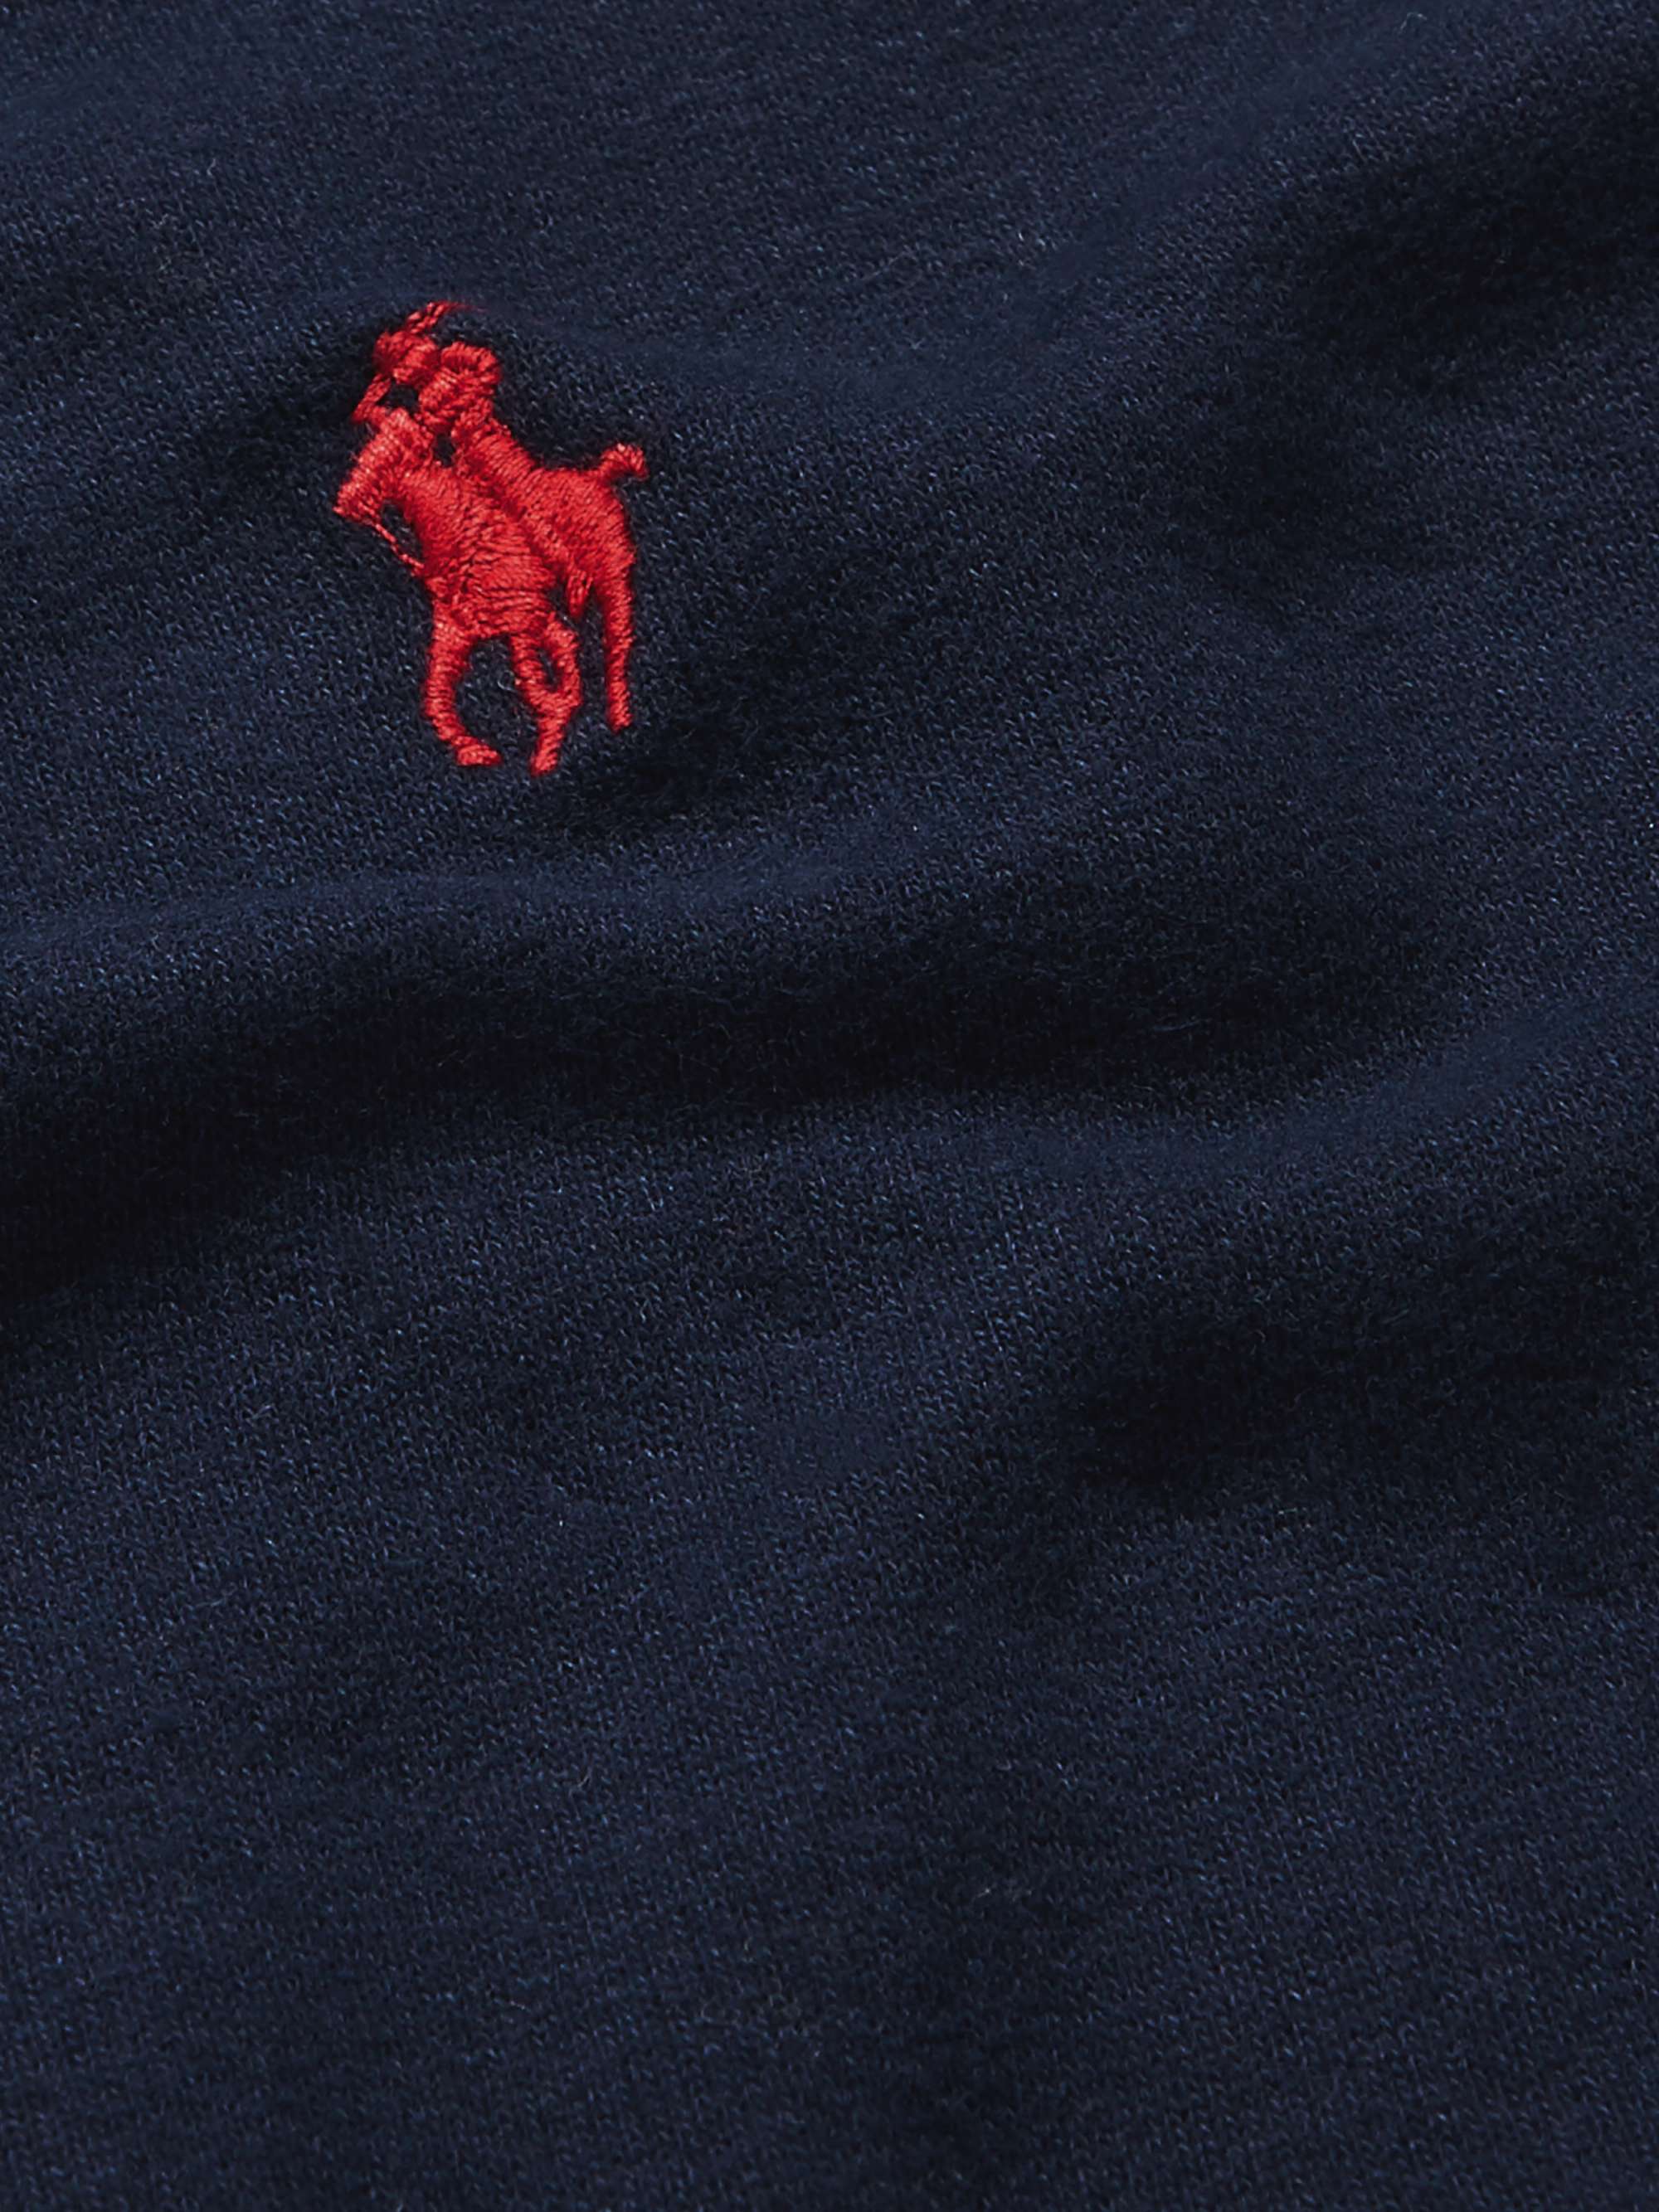 POLO RALPH LAUREN Logo-Embroidered Cotton-Blend Jersey Sweatshirt | MR  PORTER